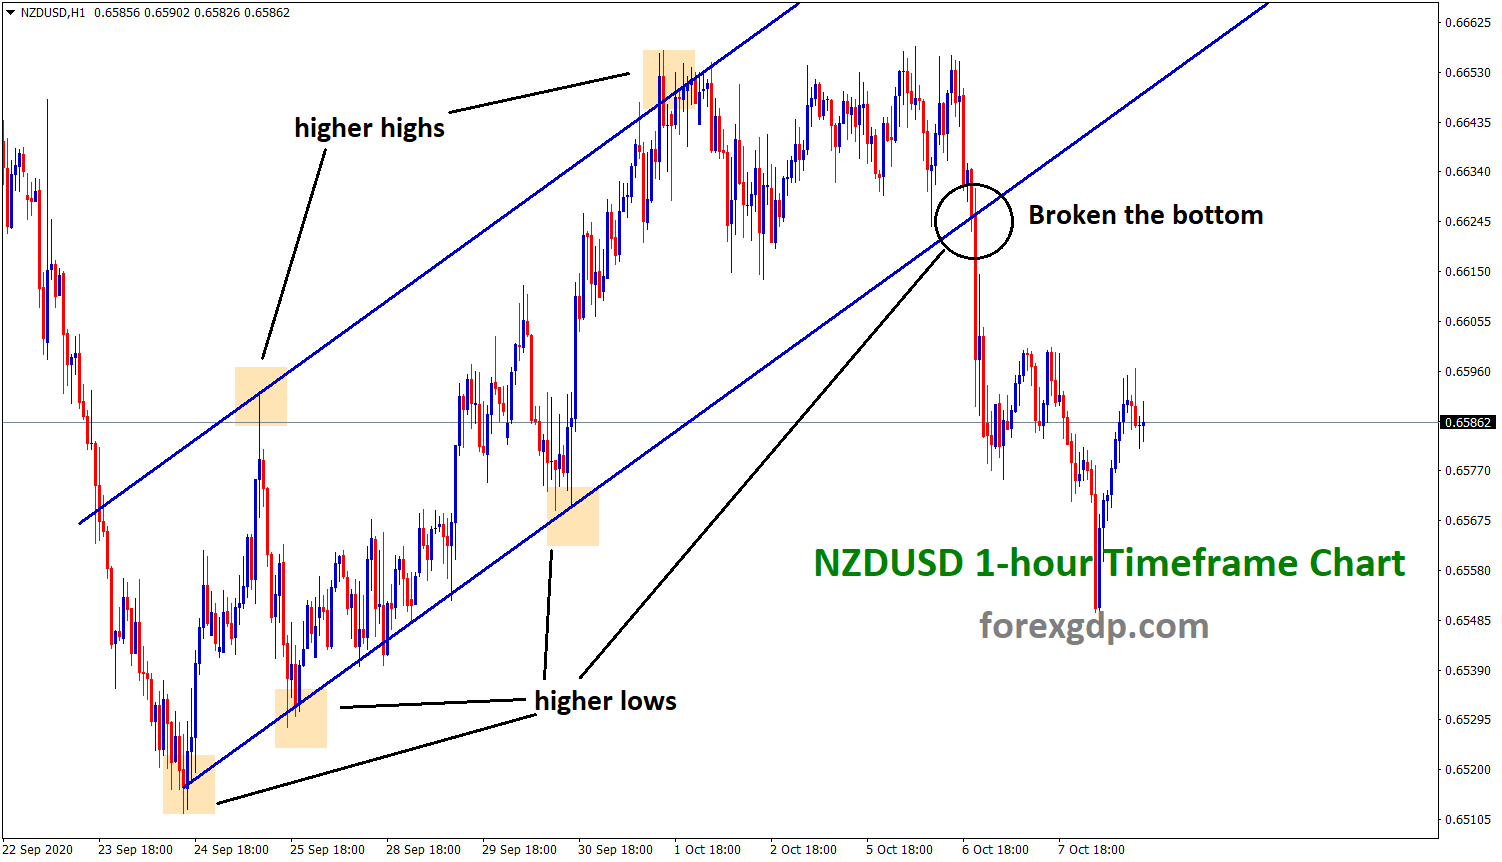 nzdusd breakout analysis in h1 chart